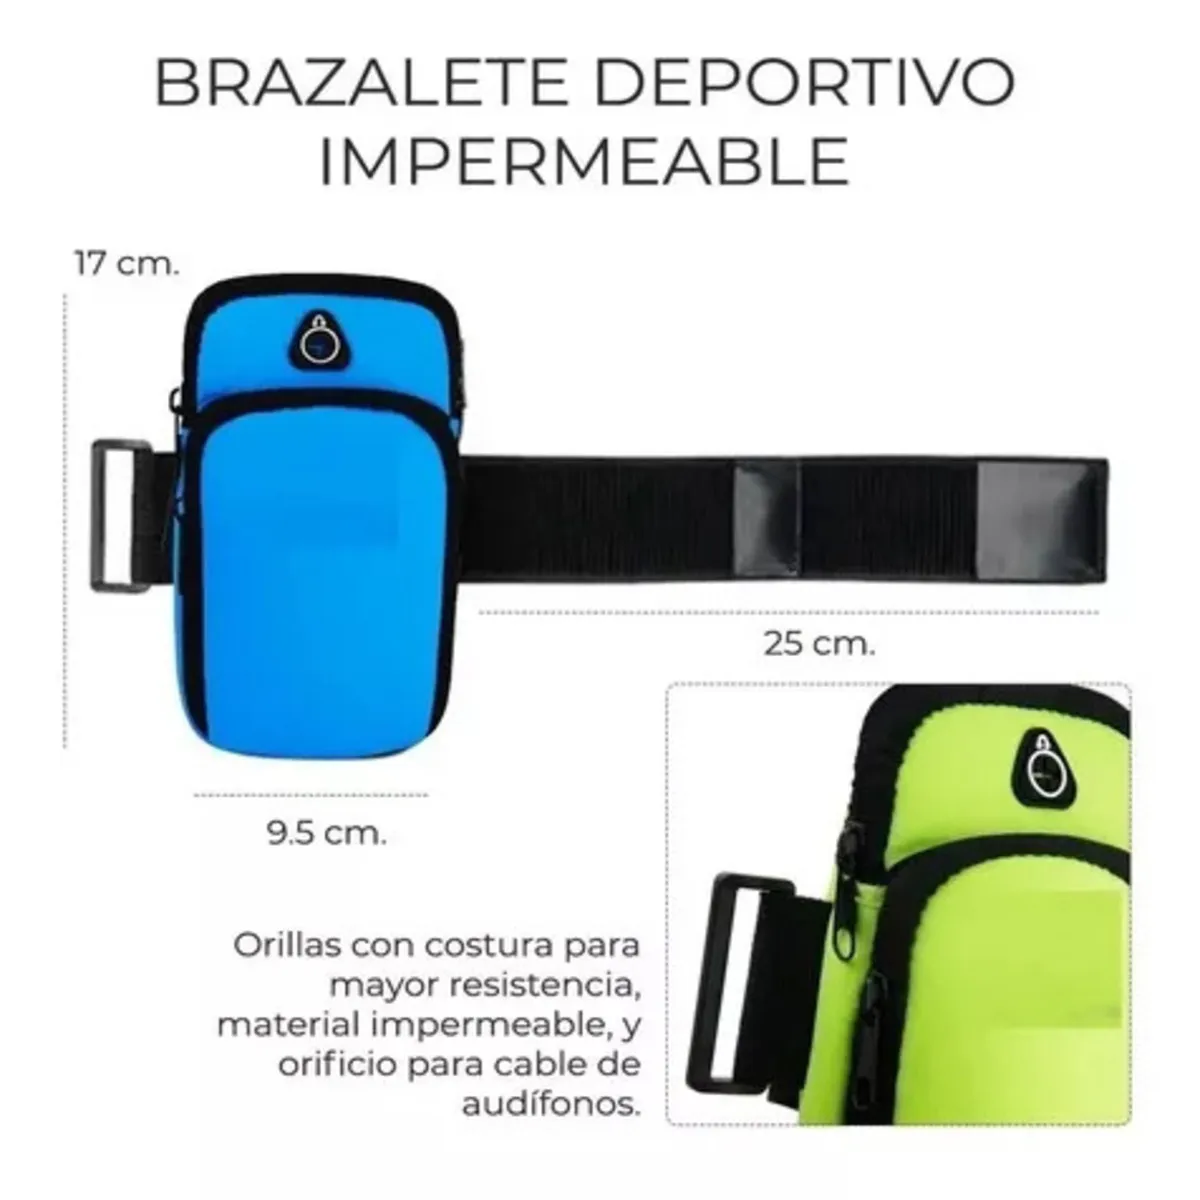 Funda Protectora Deportiva Gym Para Celular iPhone Android